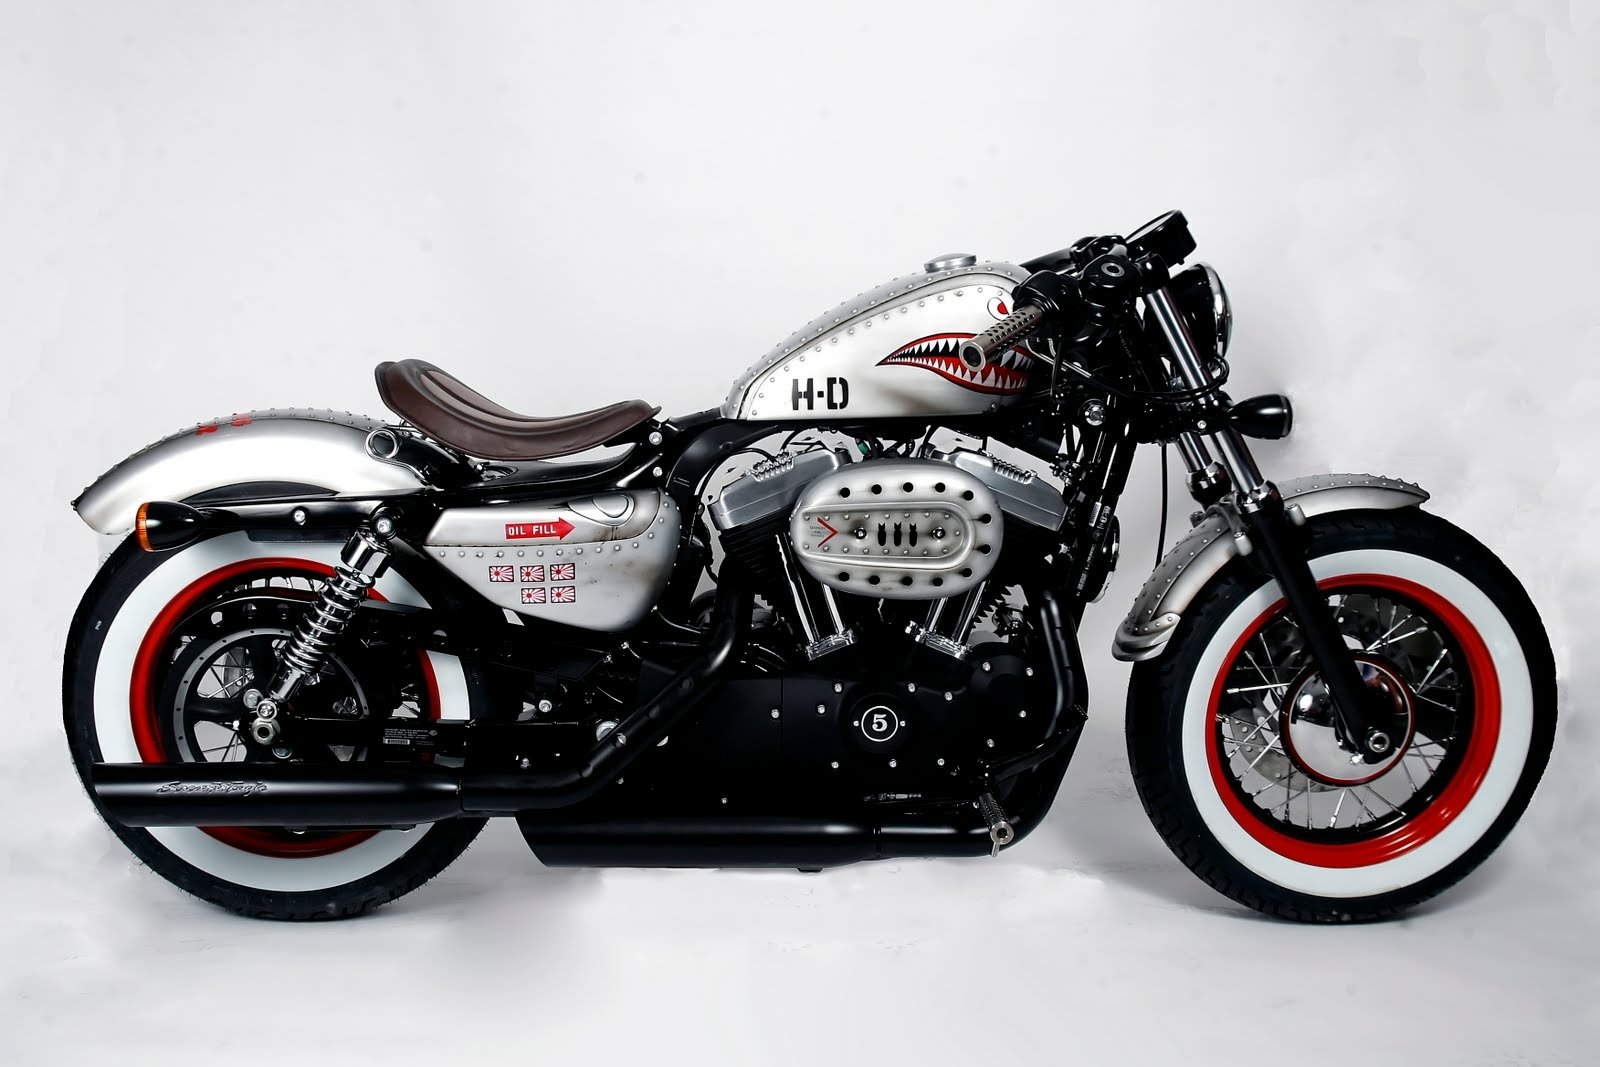 Harley-Davidson Fond d'écran and Arrière-Plan | 1600x1067 | ID:575269 ...